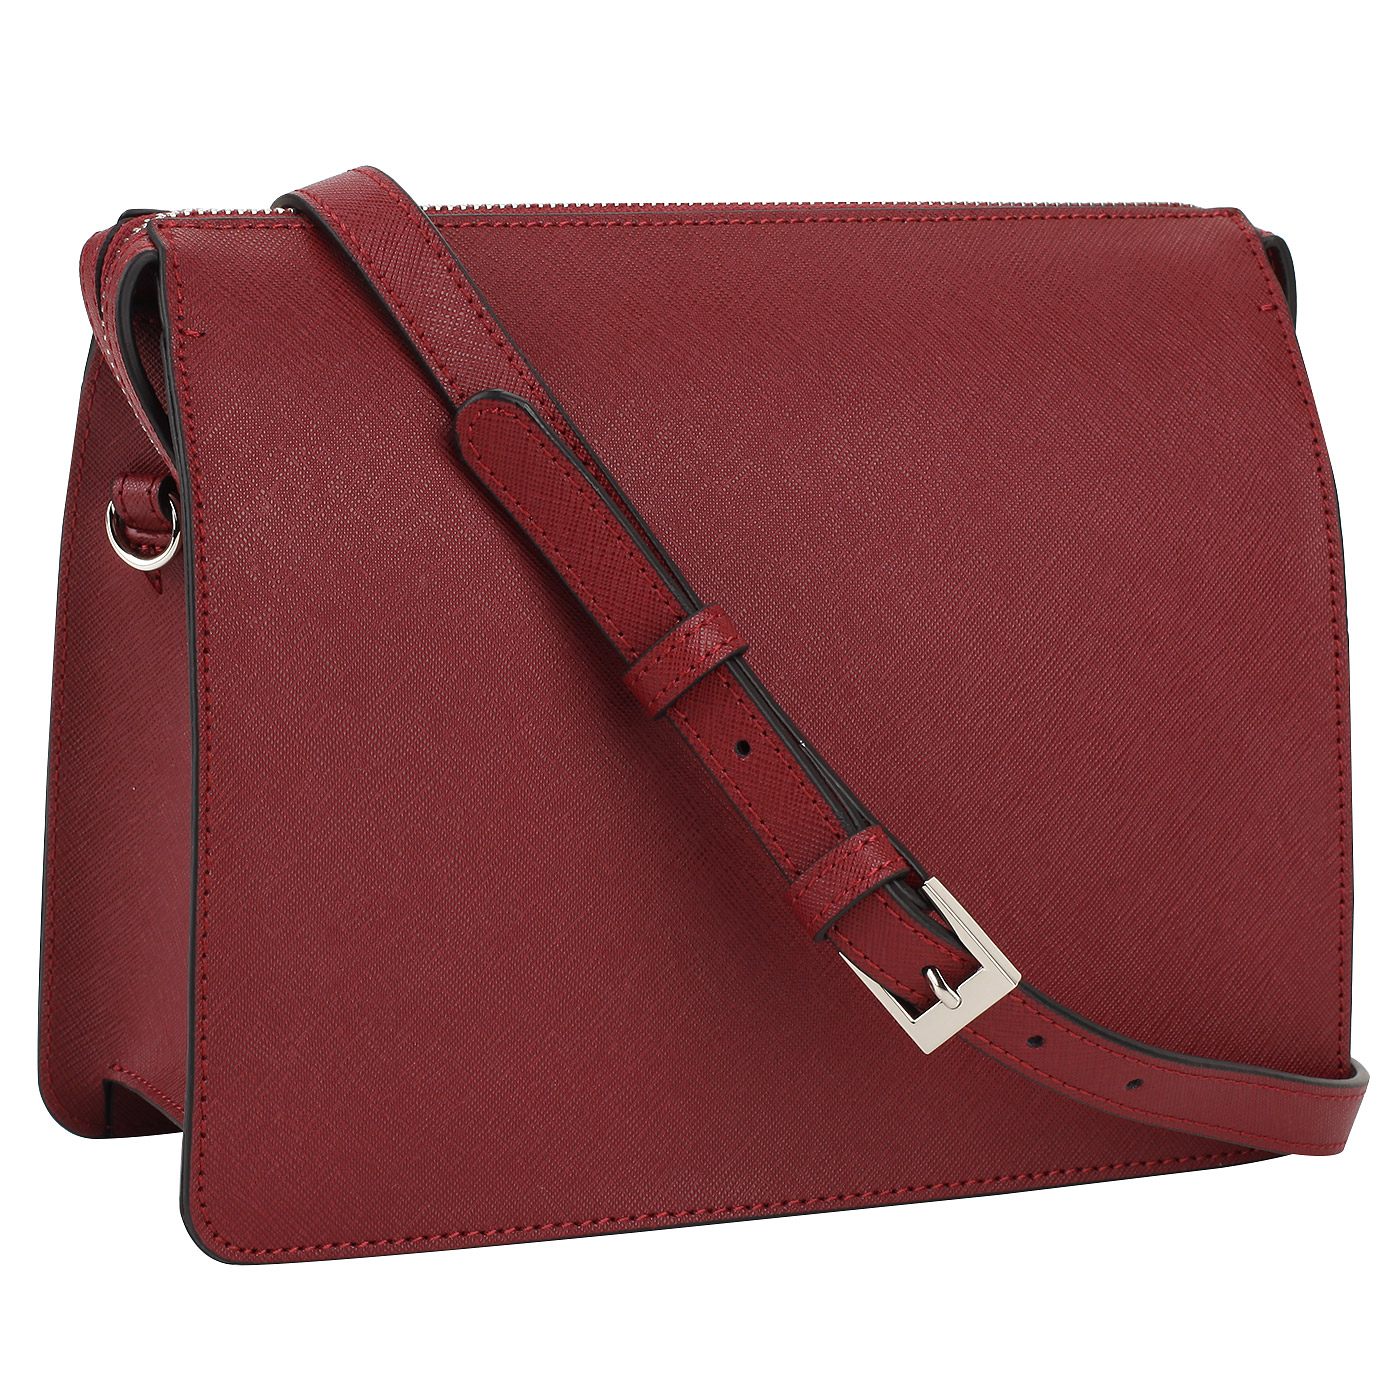 Сафьяновая сумочка с плечевым ремешком Cromia Perla